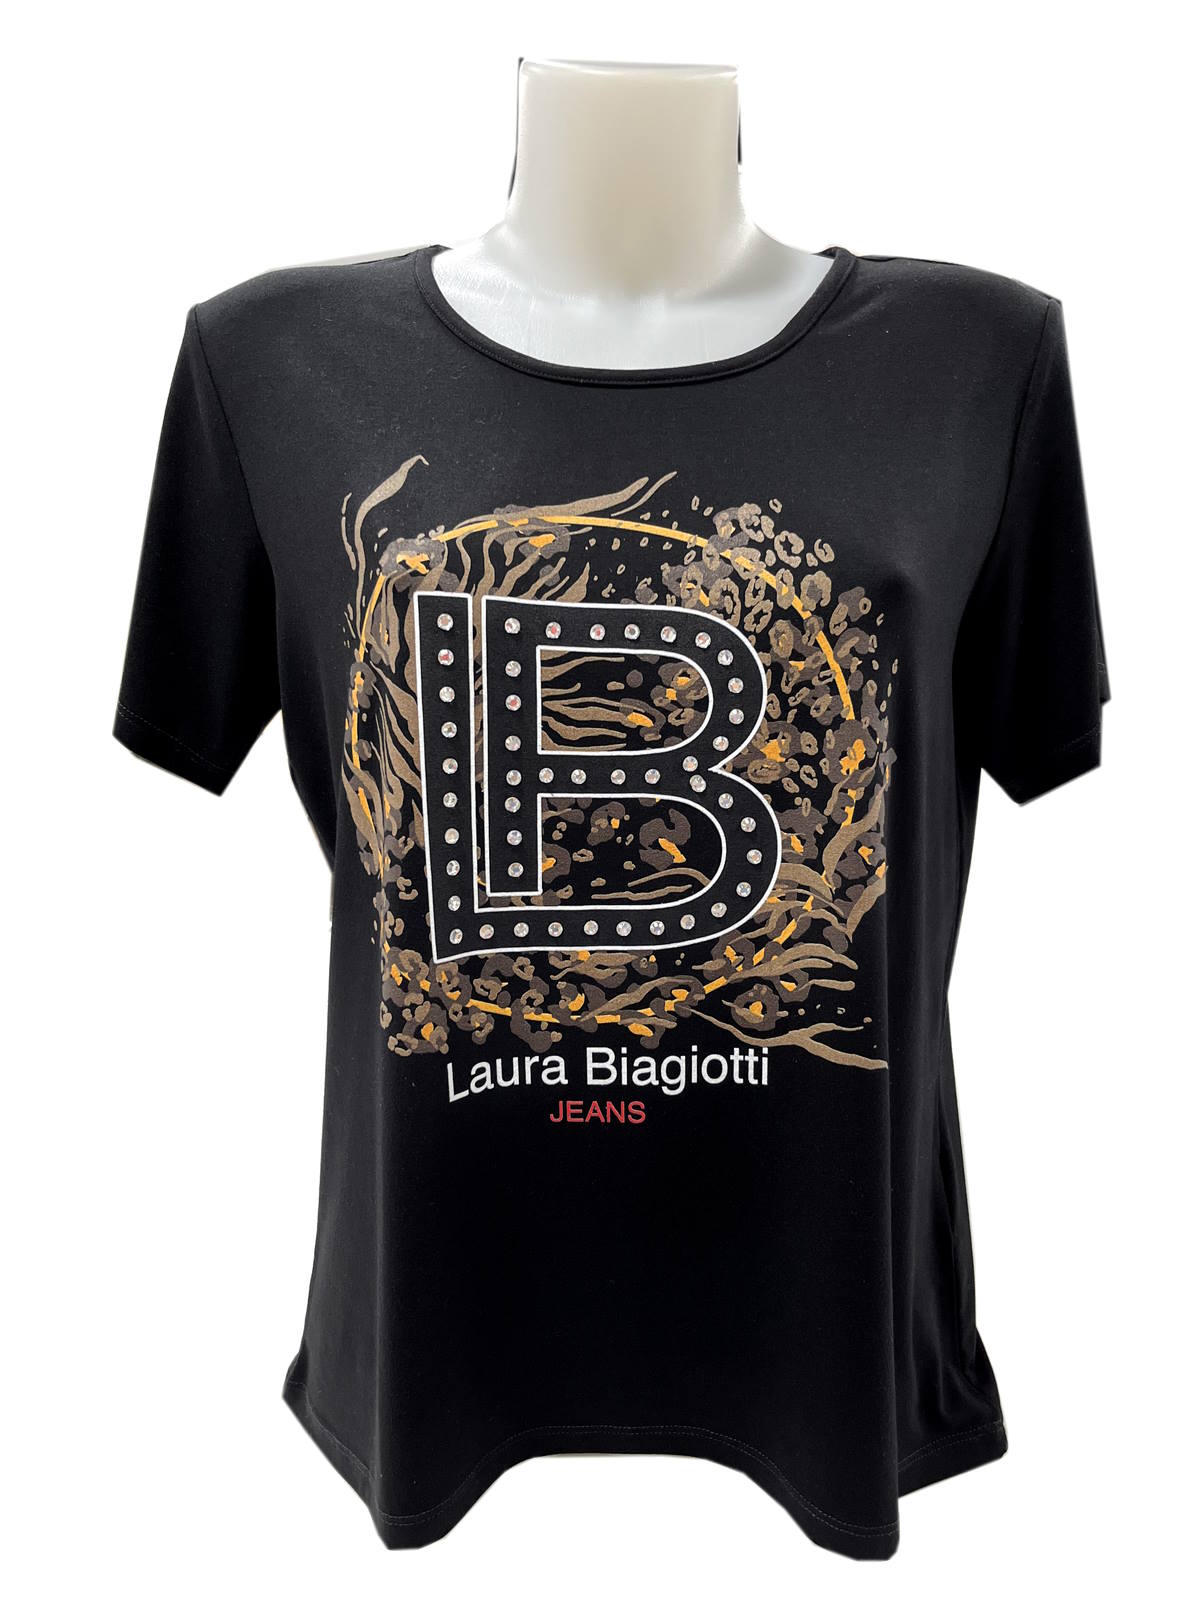 T-shirt, Brand Laura Biagiotti, Made in Italy, art. JLB02-208